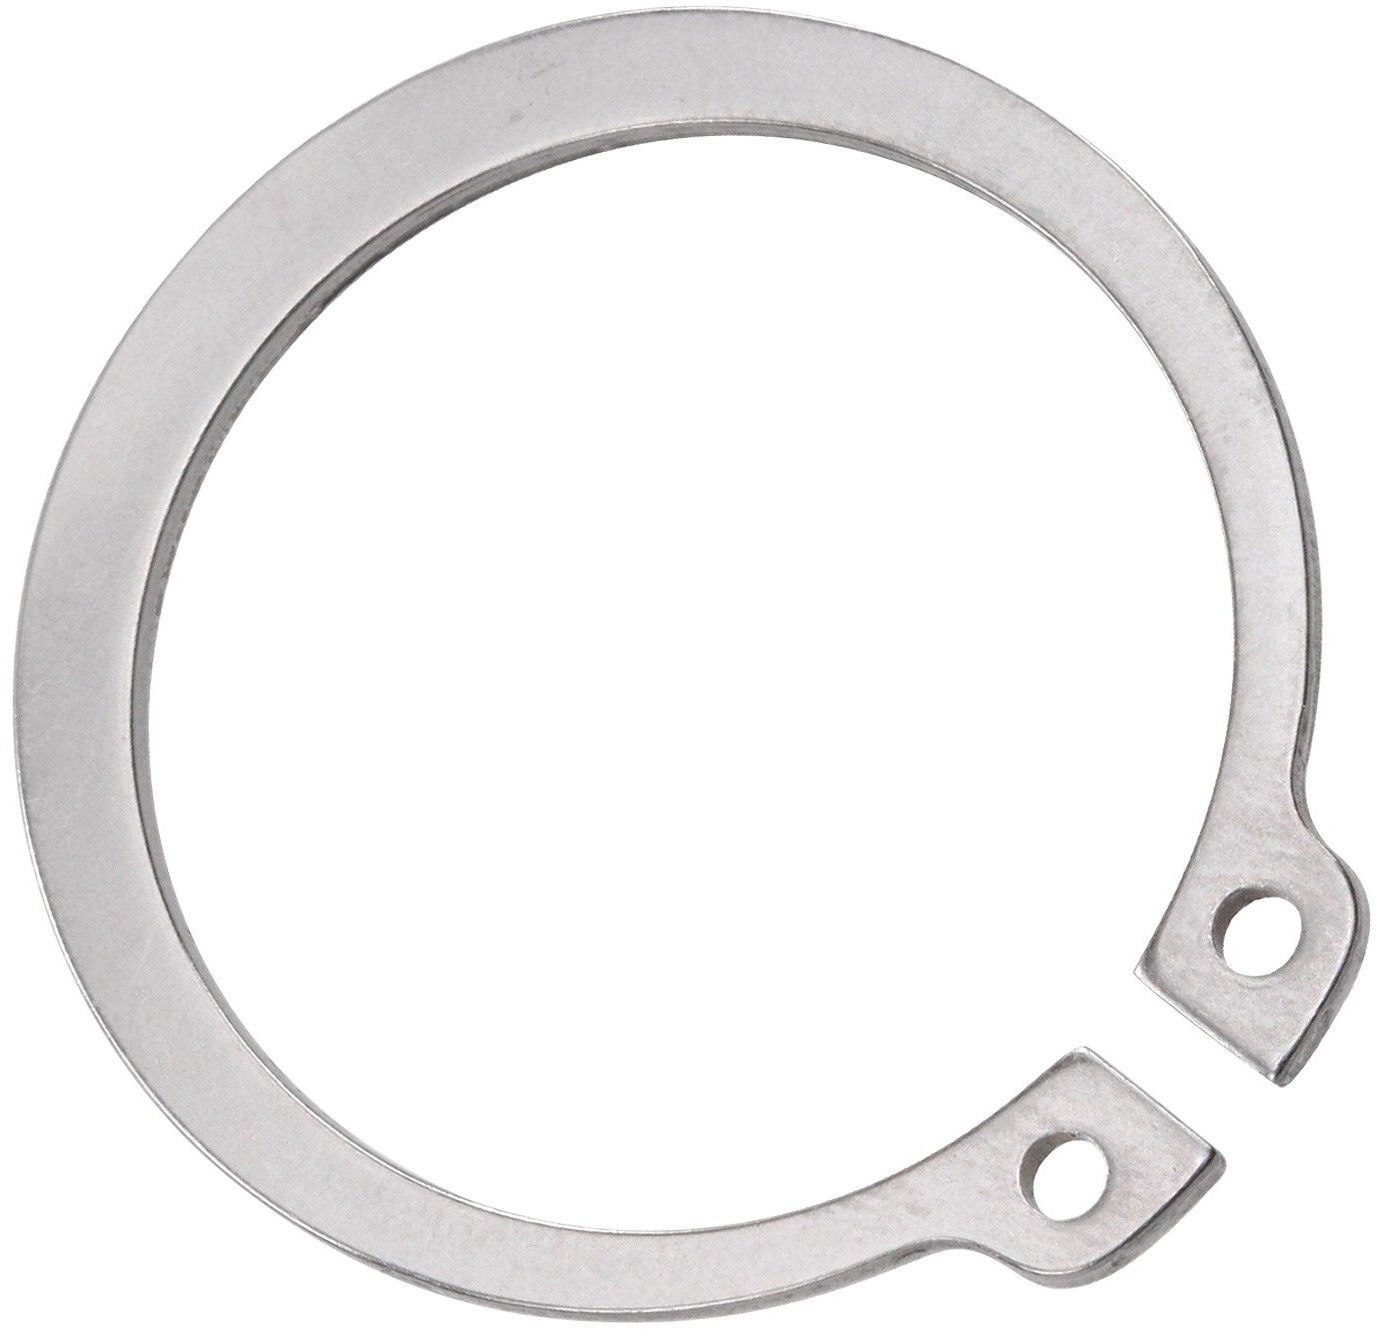 Кольцо стопорное наружное 100х3 DIN 471, нержавеющая сталь 1.4122 (А2) - фото